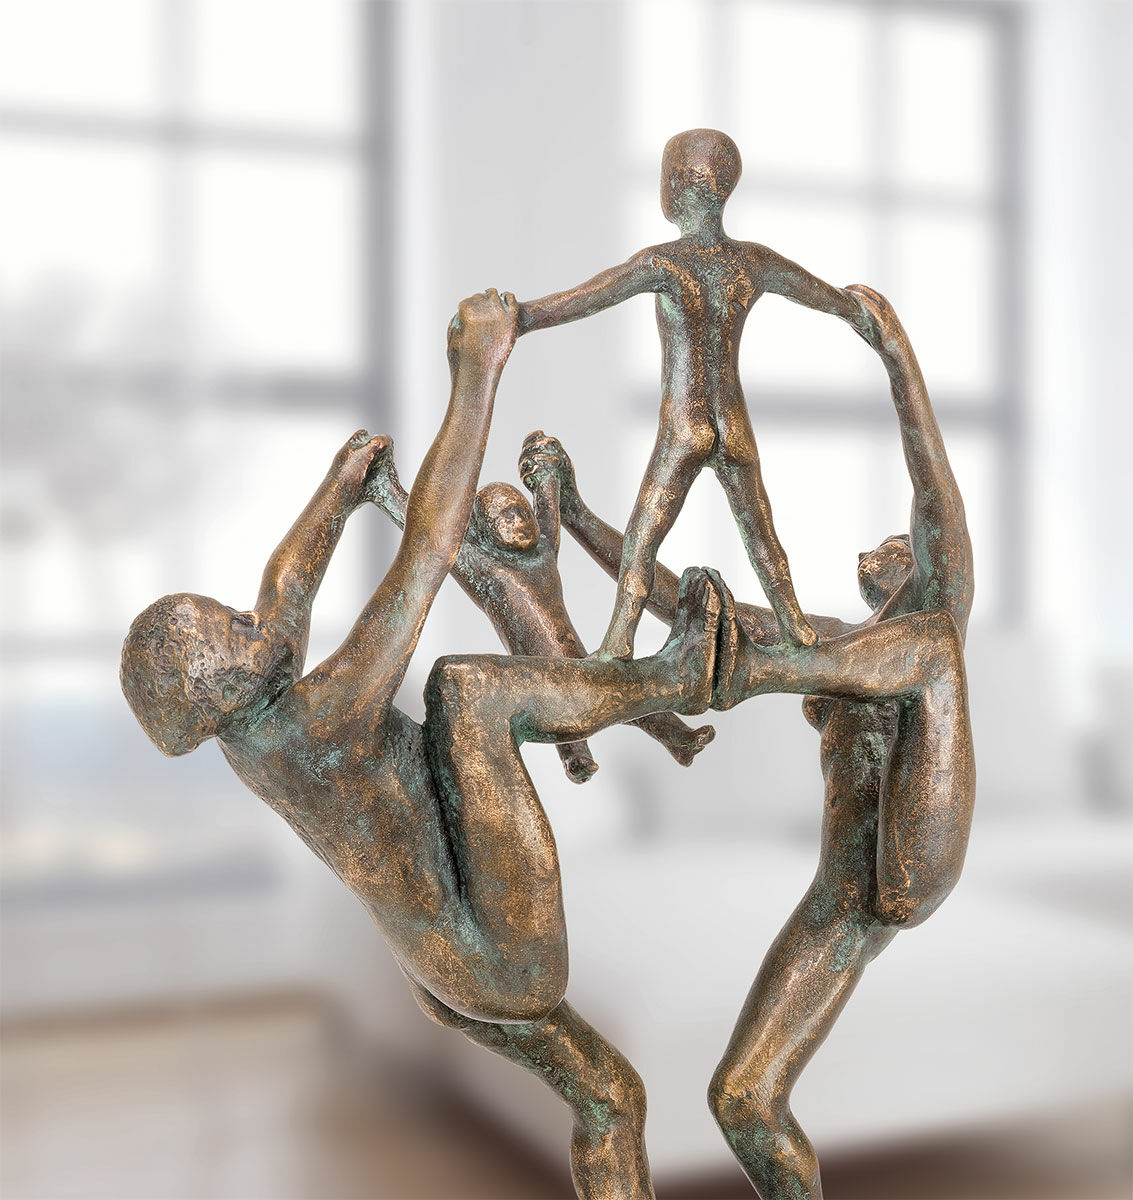 Skulptur "Familie på hjul", bronze von Adelbert Heil